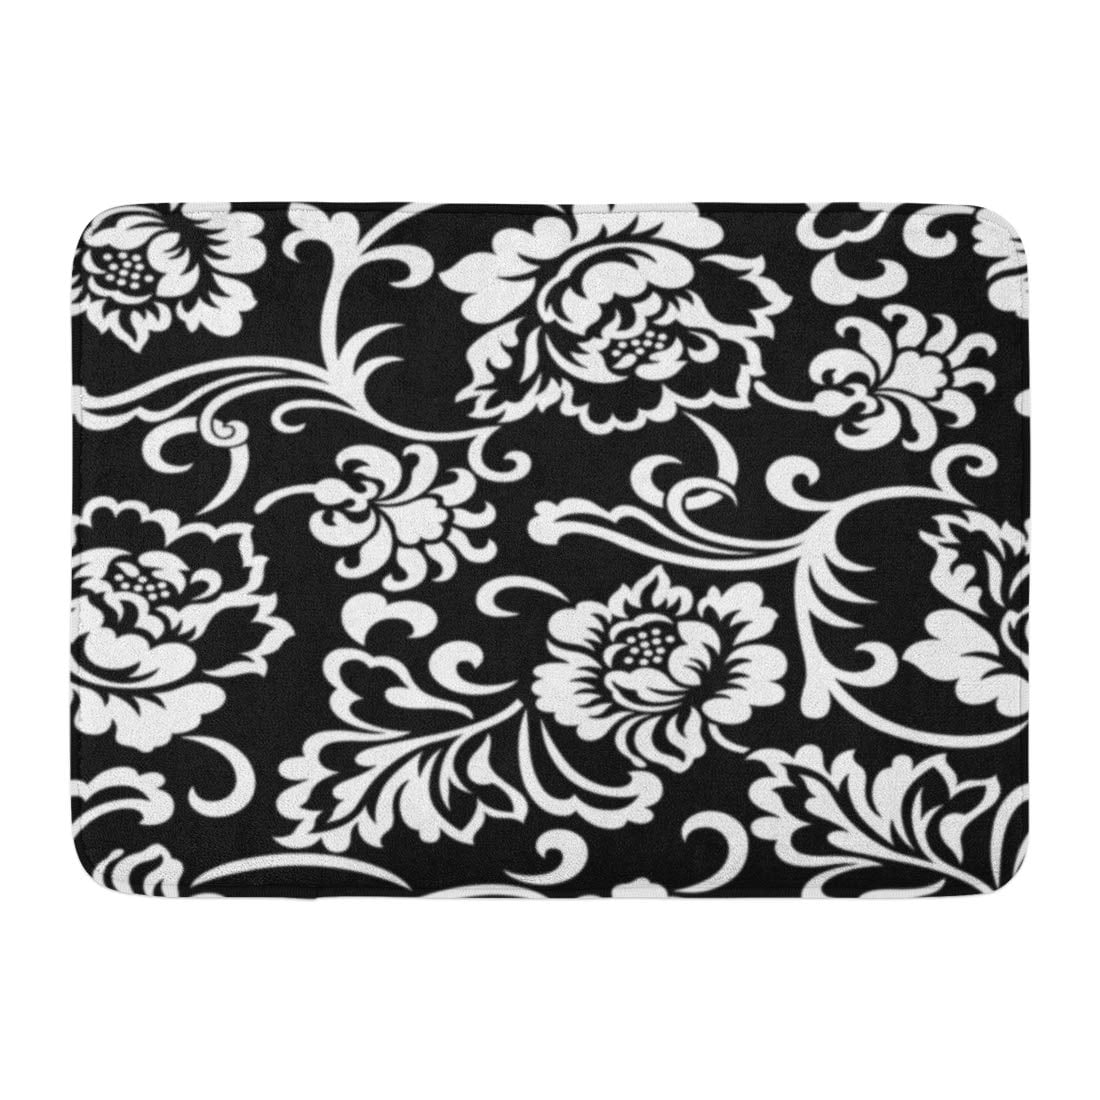 LADDKE Damask Vintage Floral Pattern White Black Abstract Foliage Doormat Floor Rug Bath Mat 23